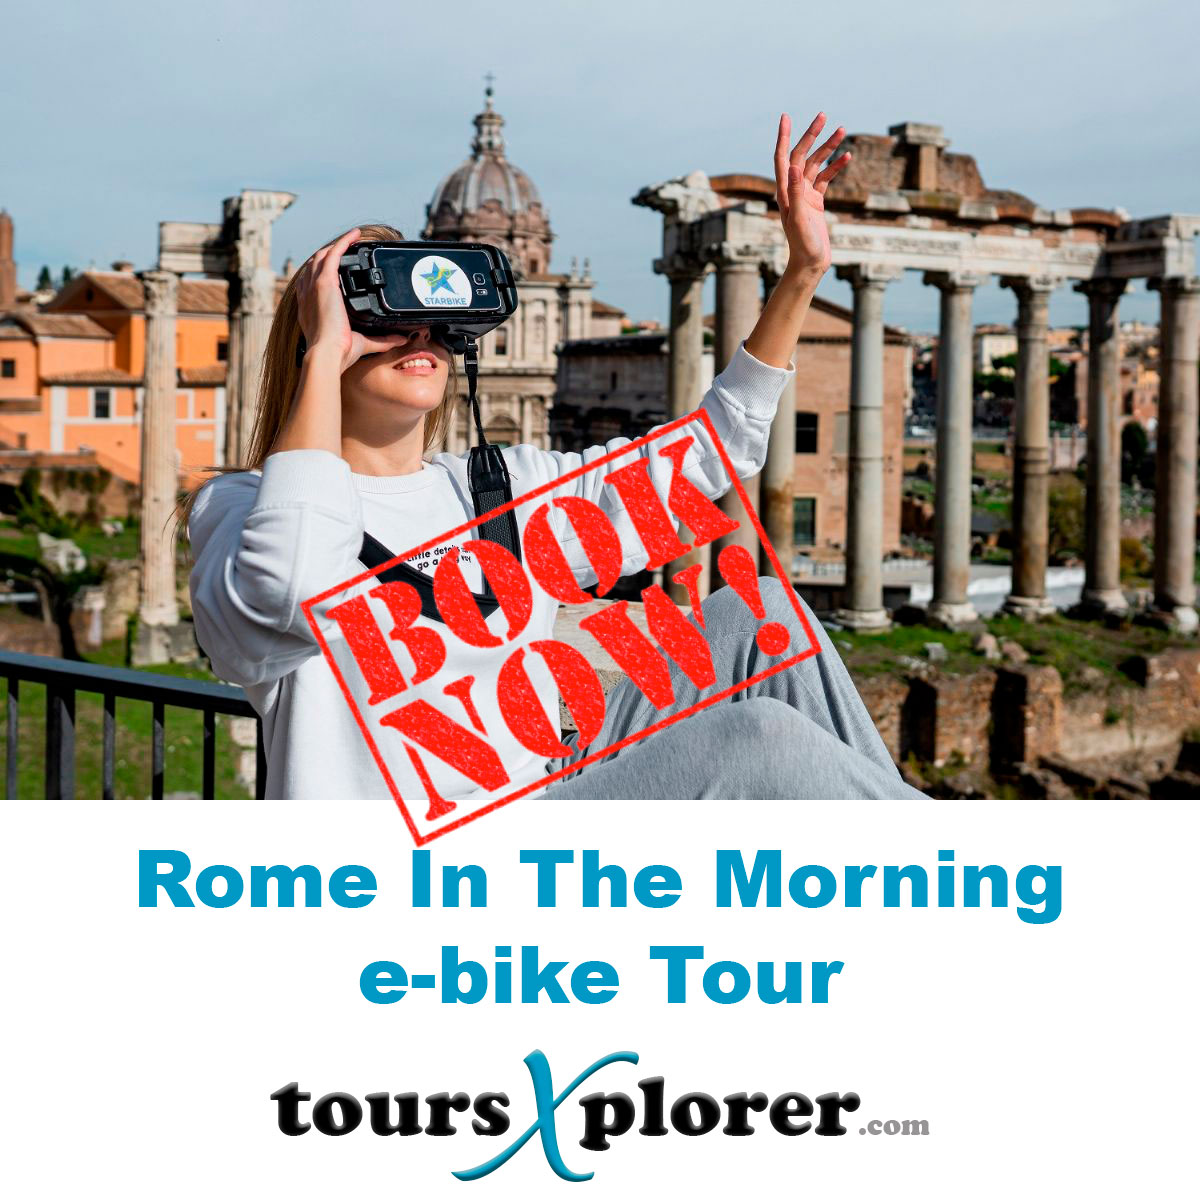 Rome In The Morning e-bike Tour by wearing 3D viewers 

#Rome #eBikeTour #RomeMorningTour #RomeSightseeing #RomeCityTour #TravelItaly #ExploreRome #VisitRome #ItalyTourism #ToursXplorer

toursxplorer.com/tour/rome-in-t…